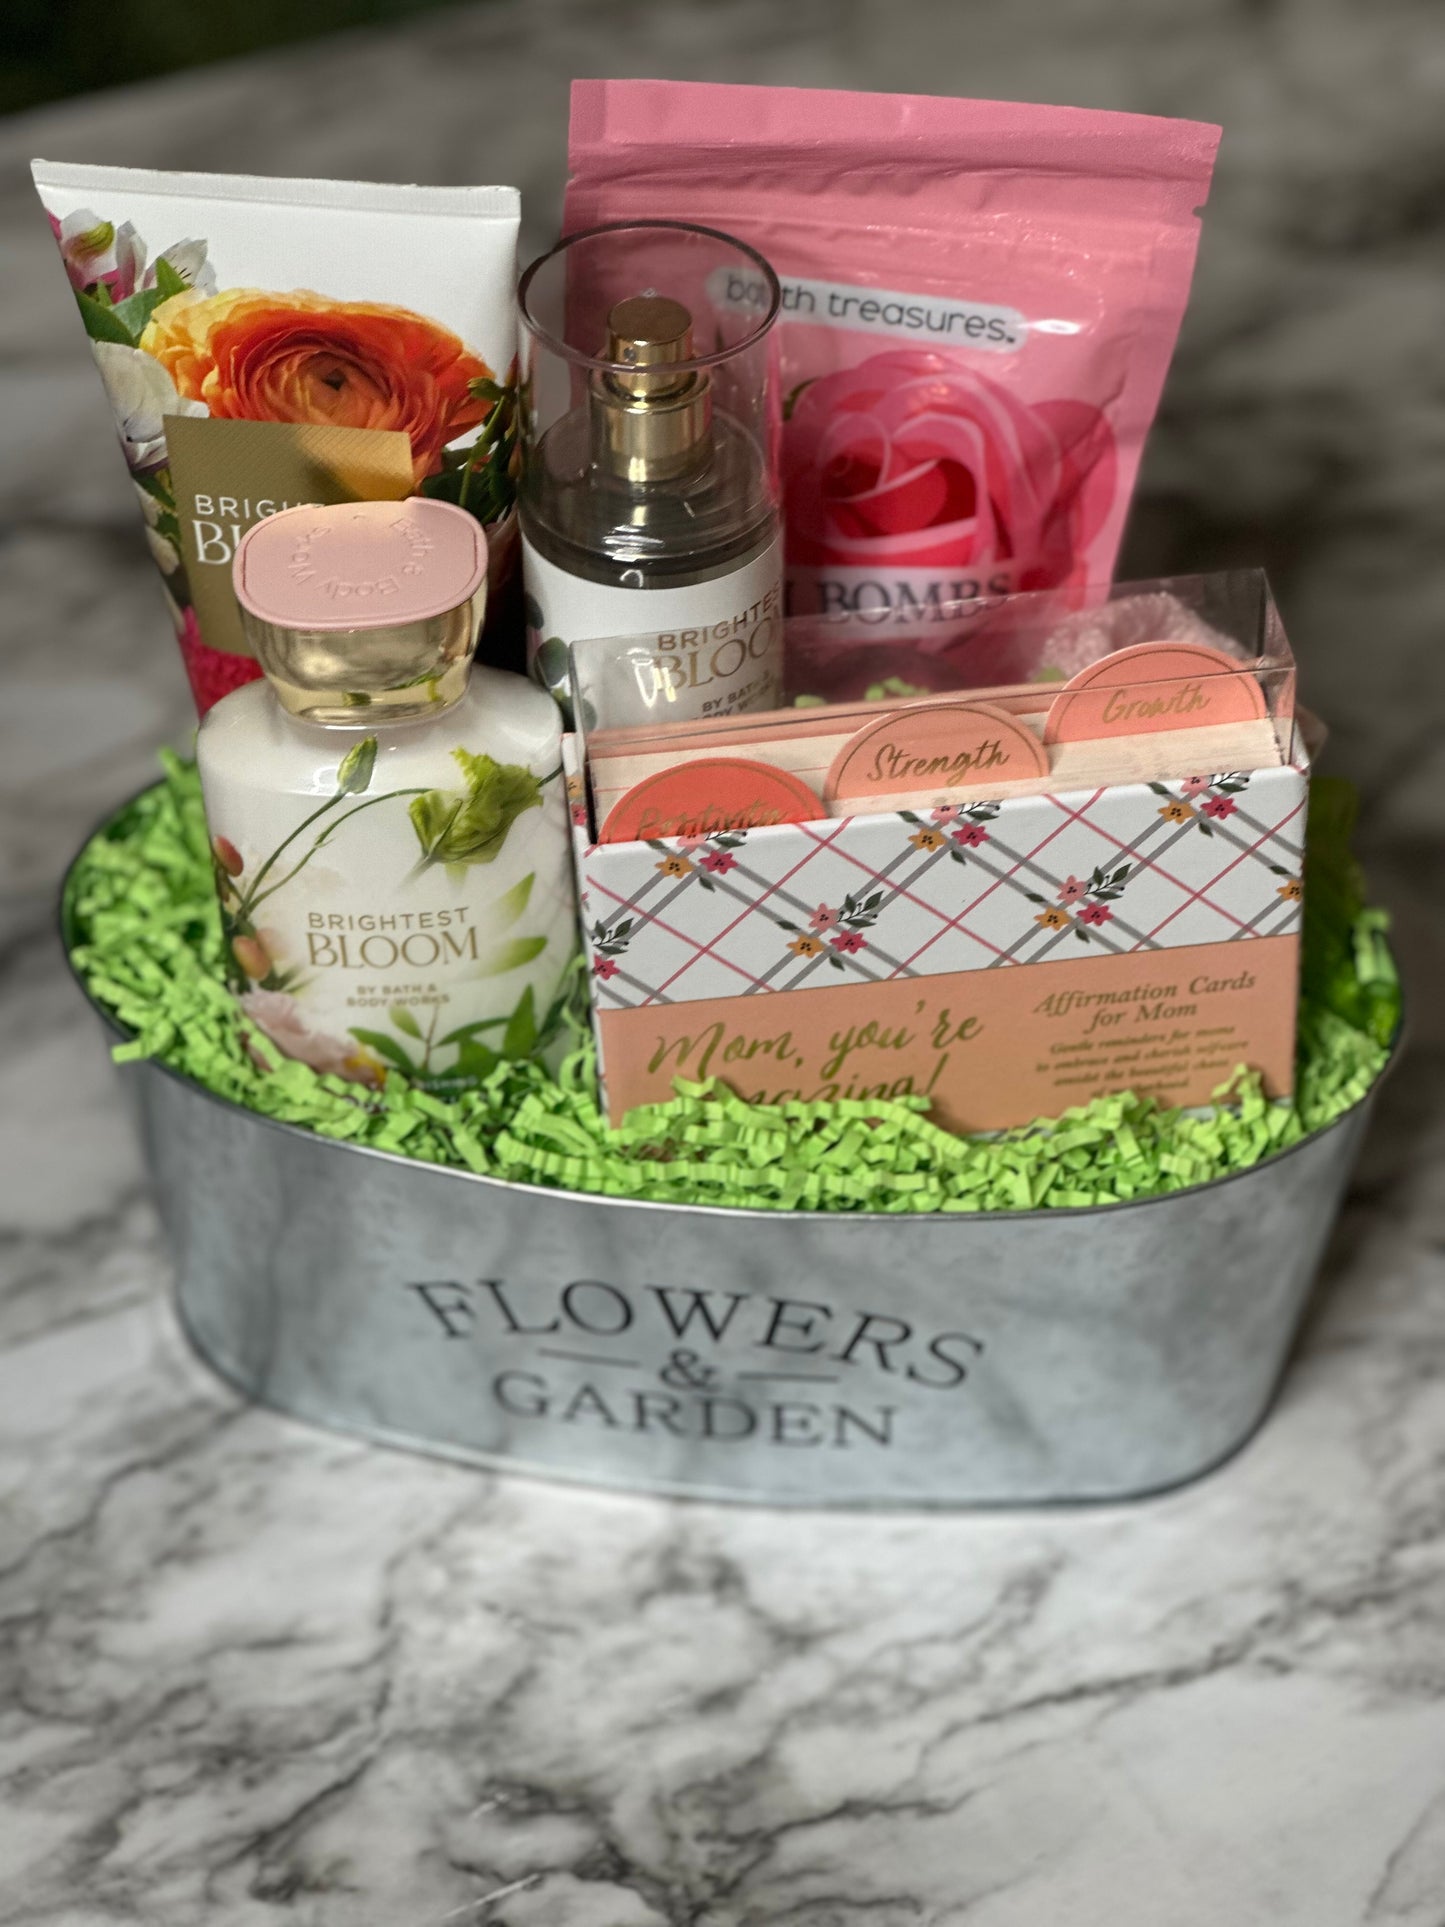 Flowers & Garden Affirmation Gift Basket